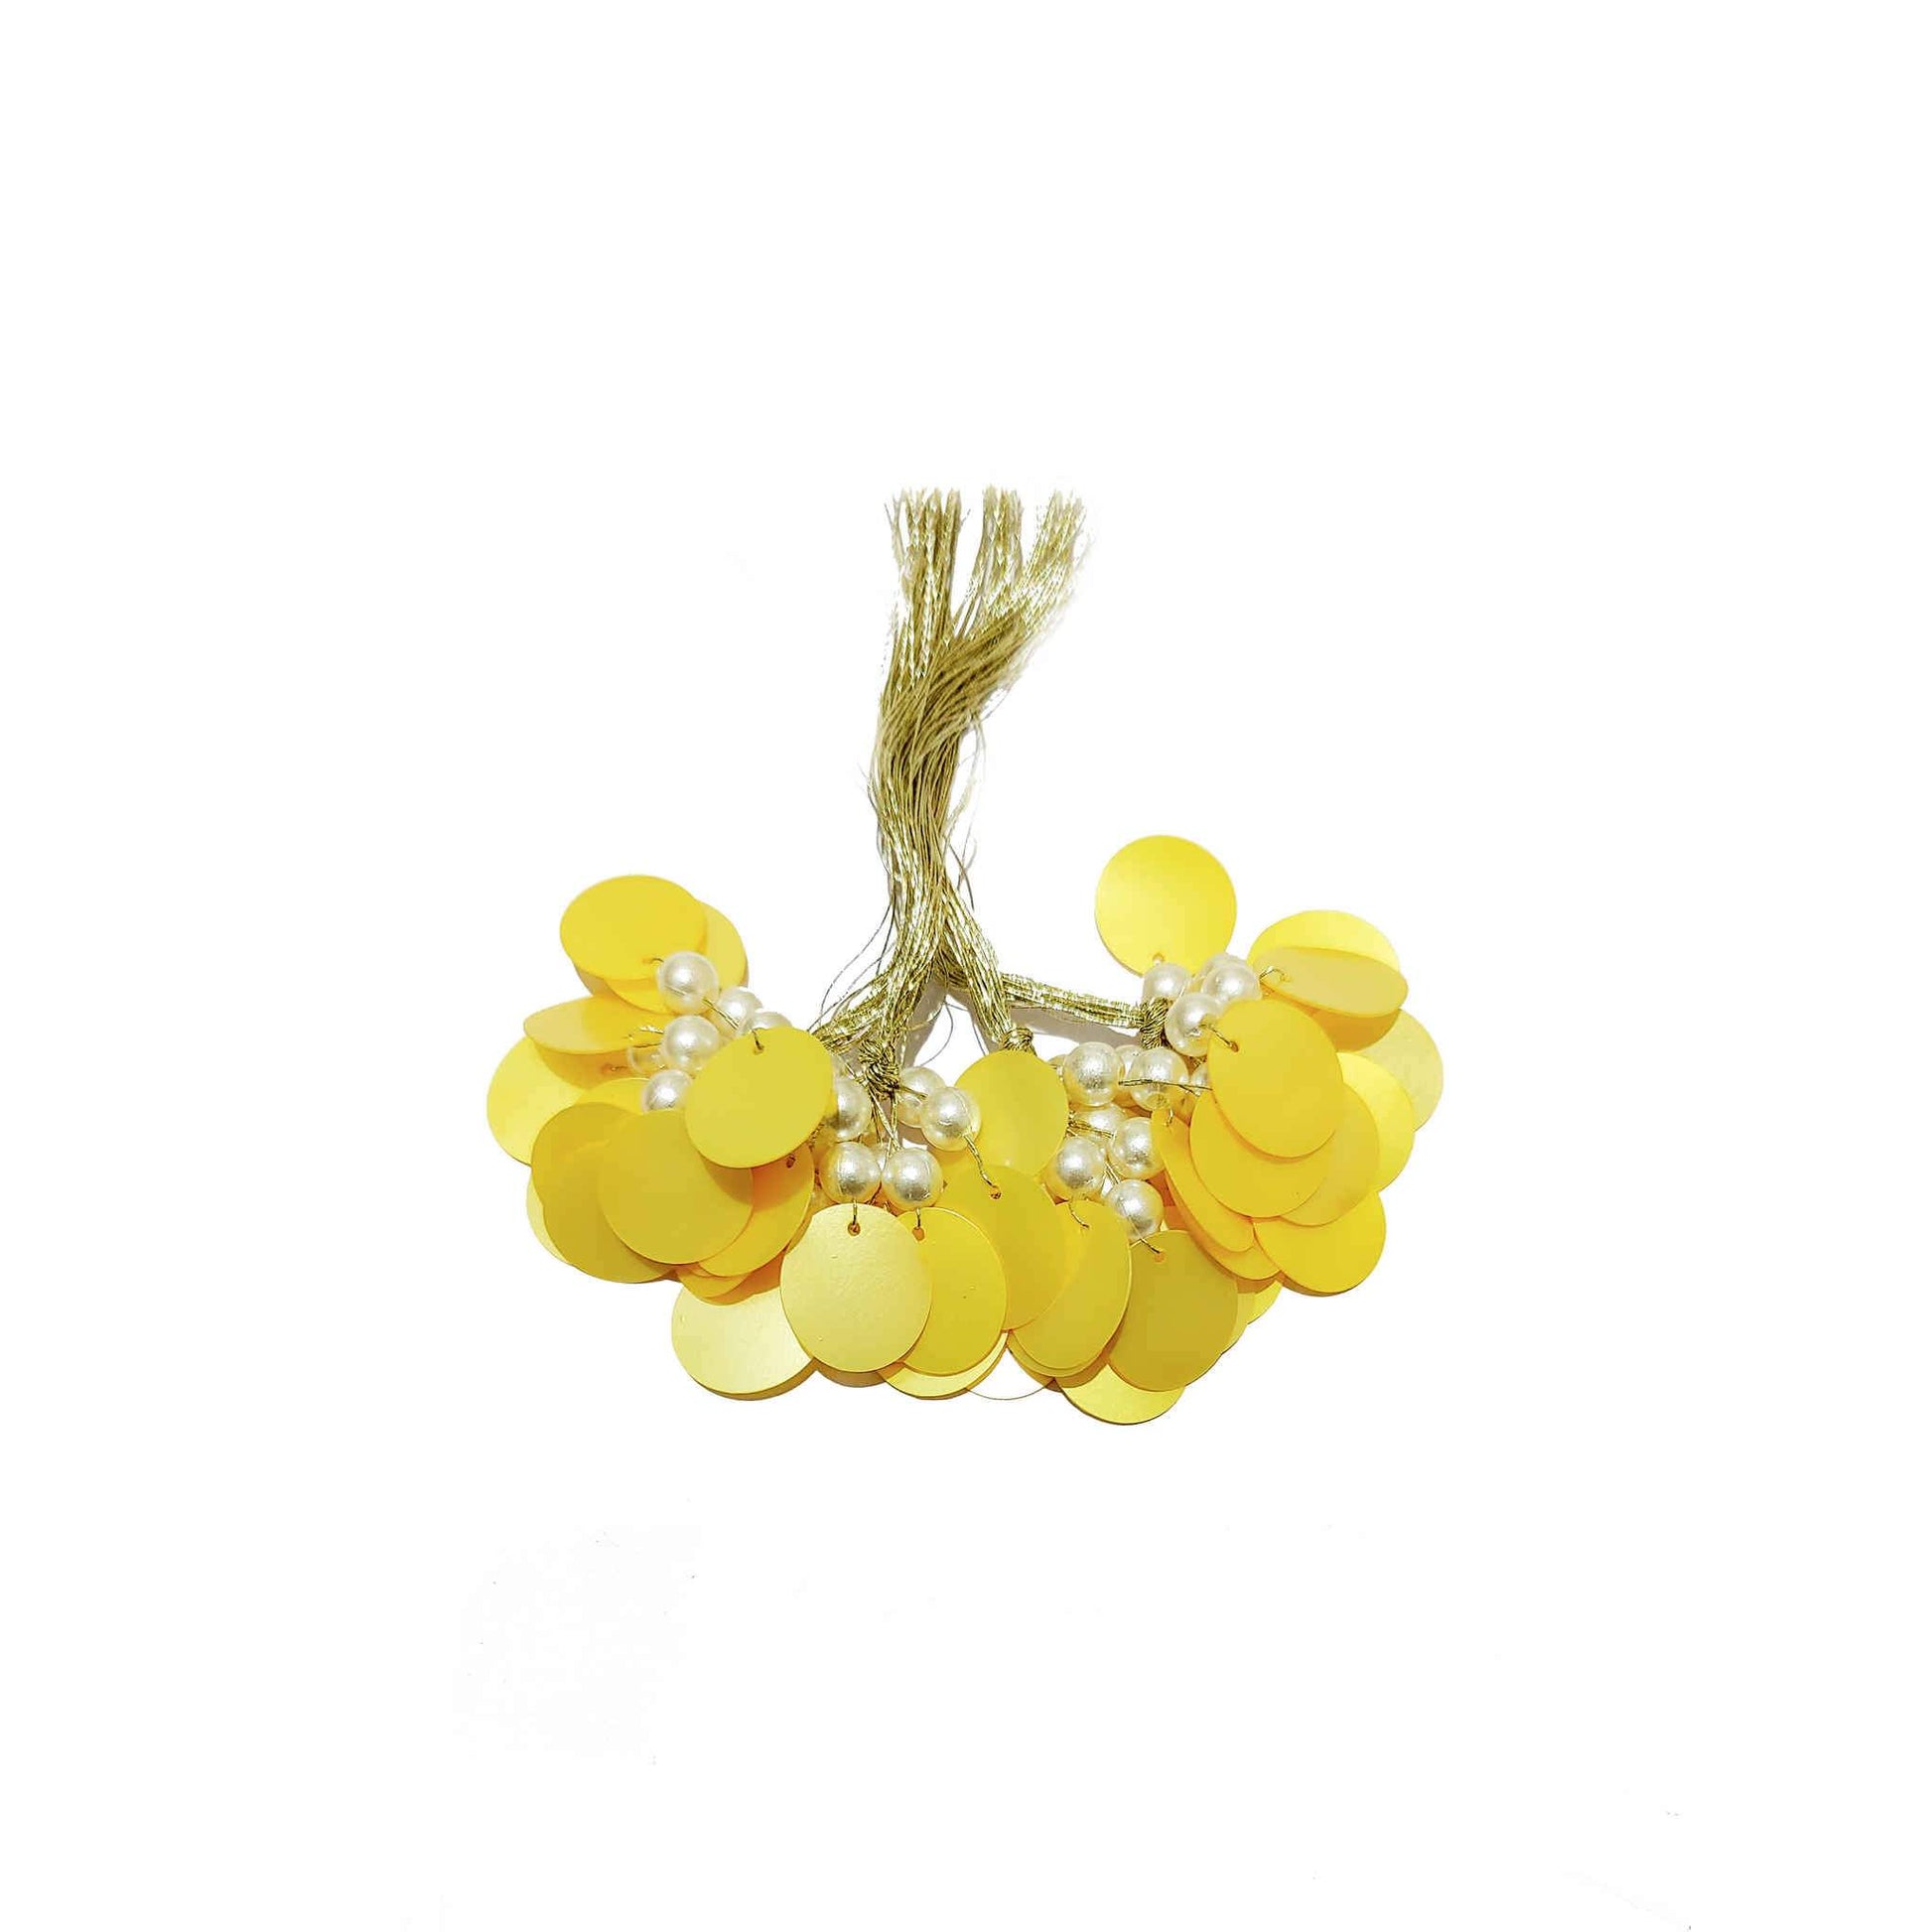 Indian Petals Handmade Sitara Thread Fringe Tassel for Craft, Jewelry or Dressing - Design 856, Yellow